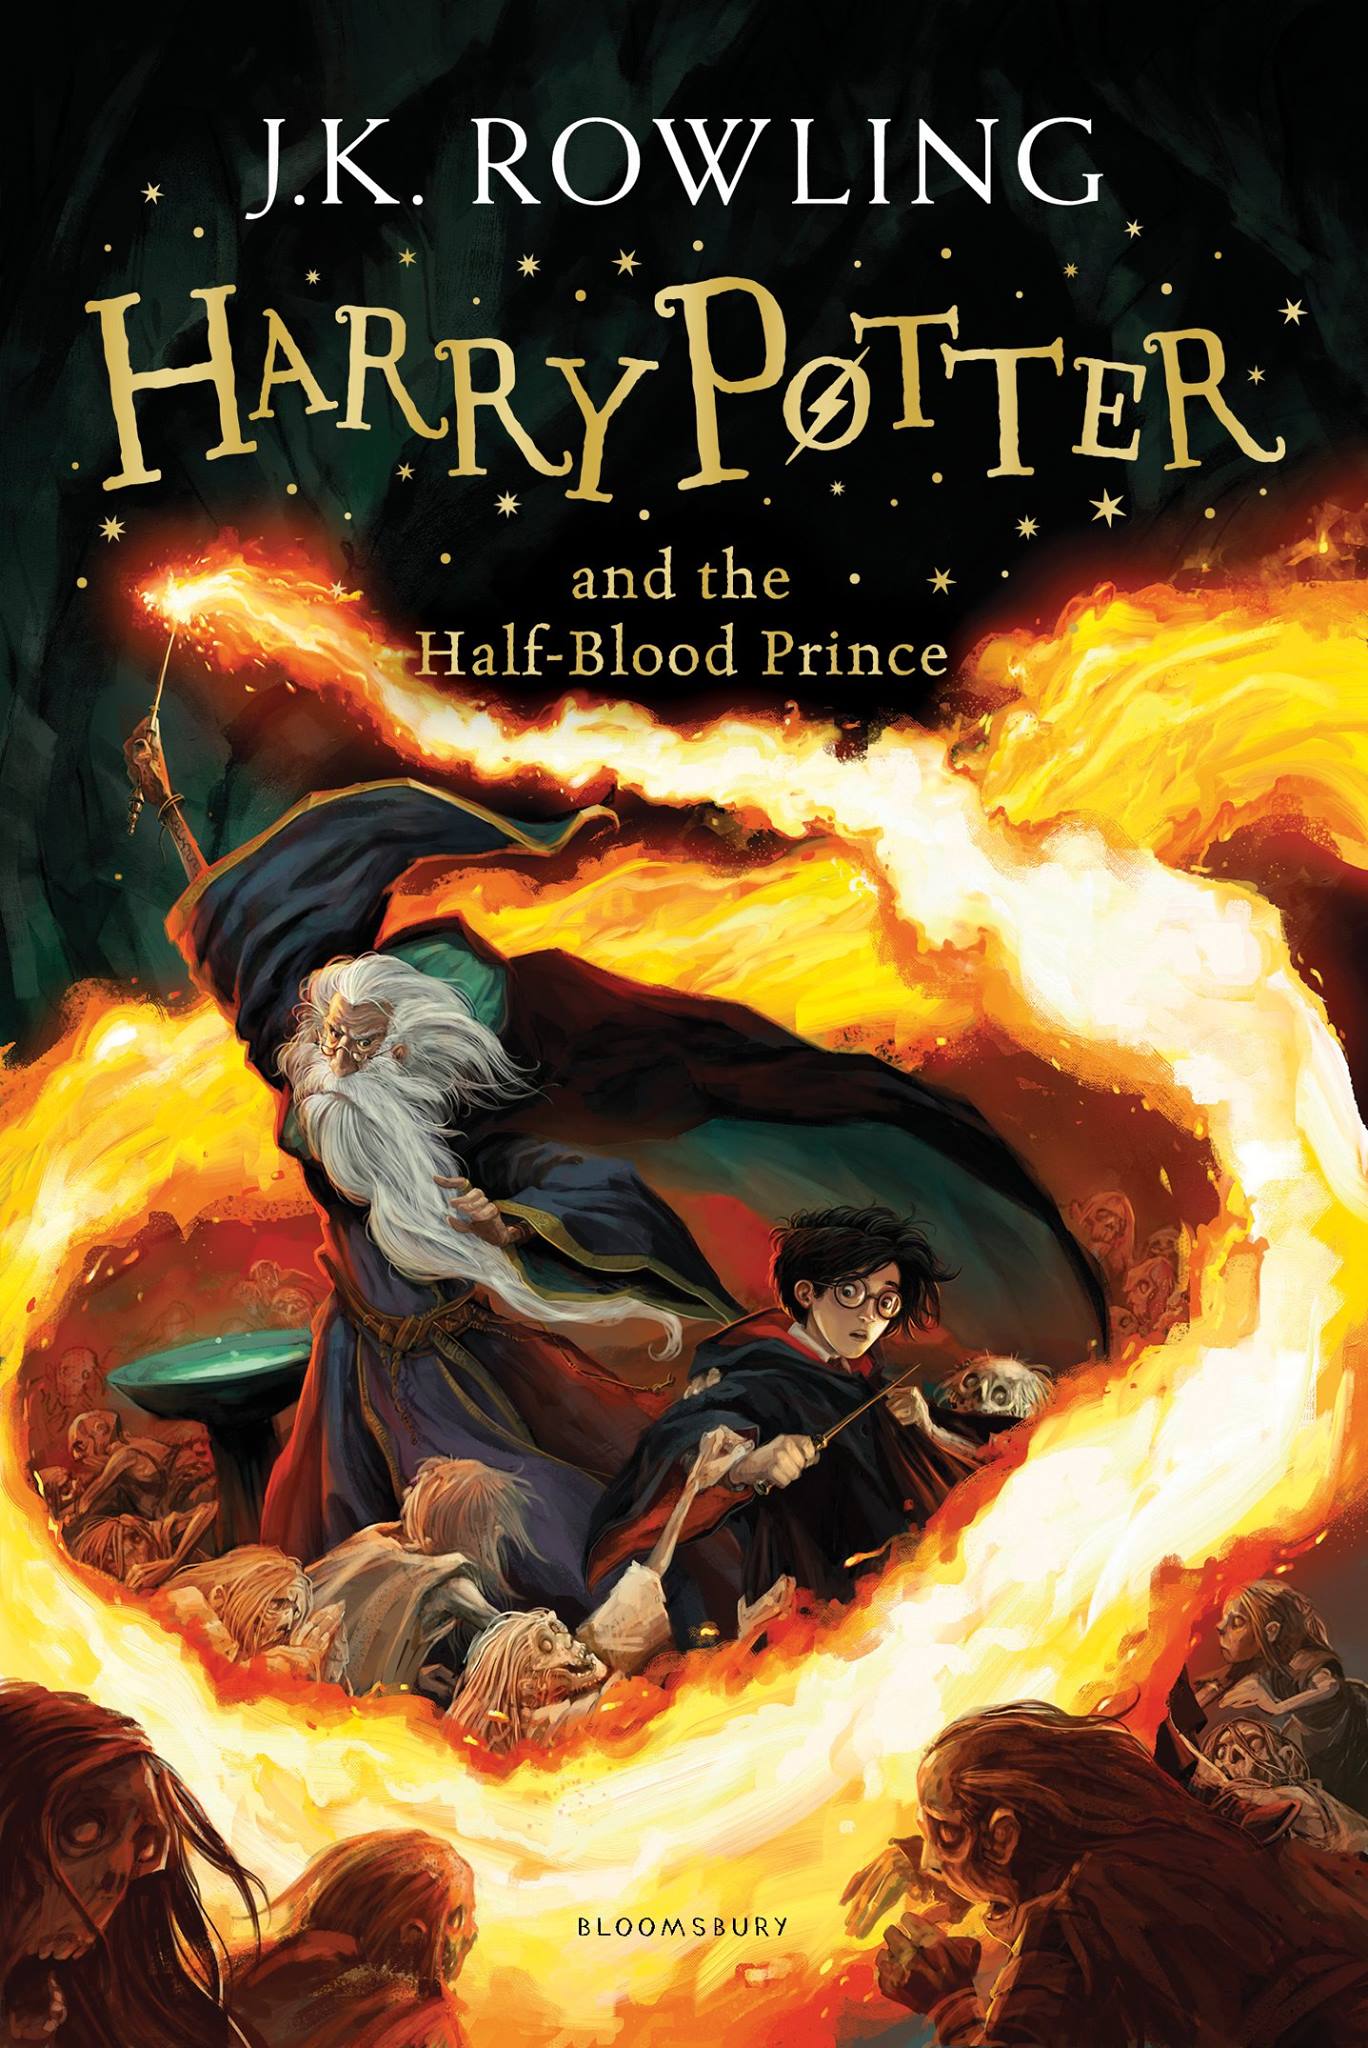 Книга на английском - Harry Potter, Book 6 of 7: Harry Potter and the Half-Blood Prince by Joanne K. Rowling - обложка книги скачать бесплатно